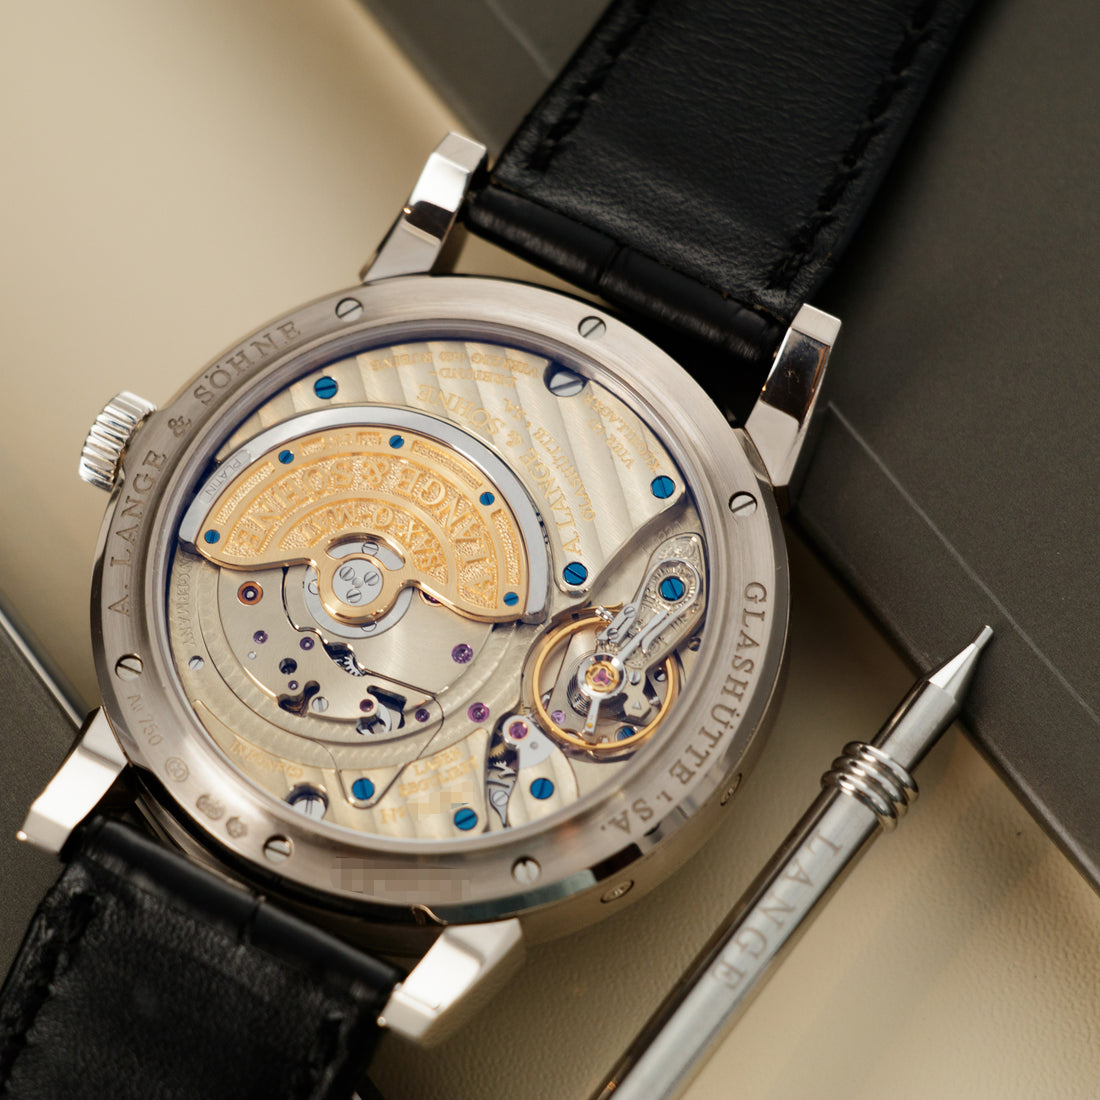 A. Lange & Sohne White Gold Perpetual Calendar Watch Ref. 310.026